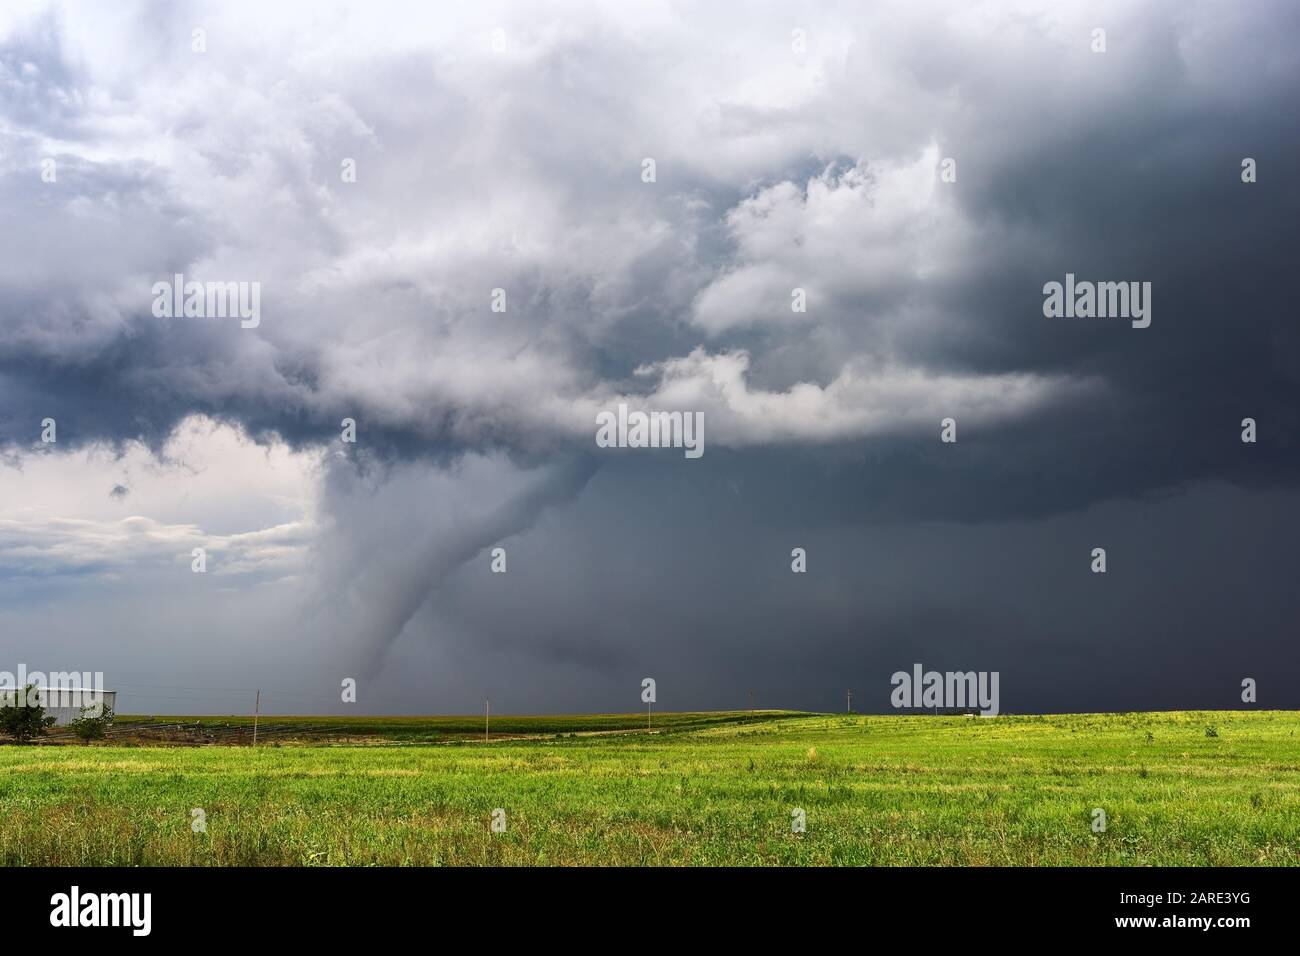 Supercell tornado touching down beneath a thunderstorm near Otis, Colorado Stock Photo